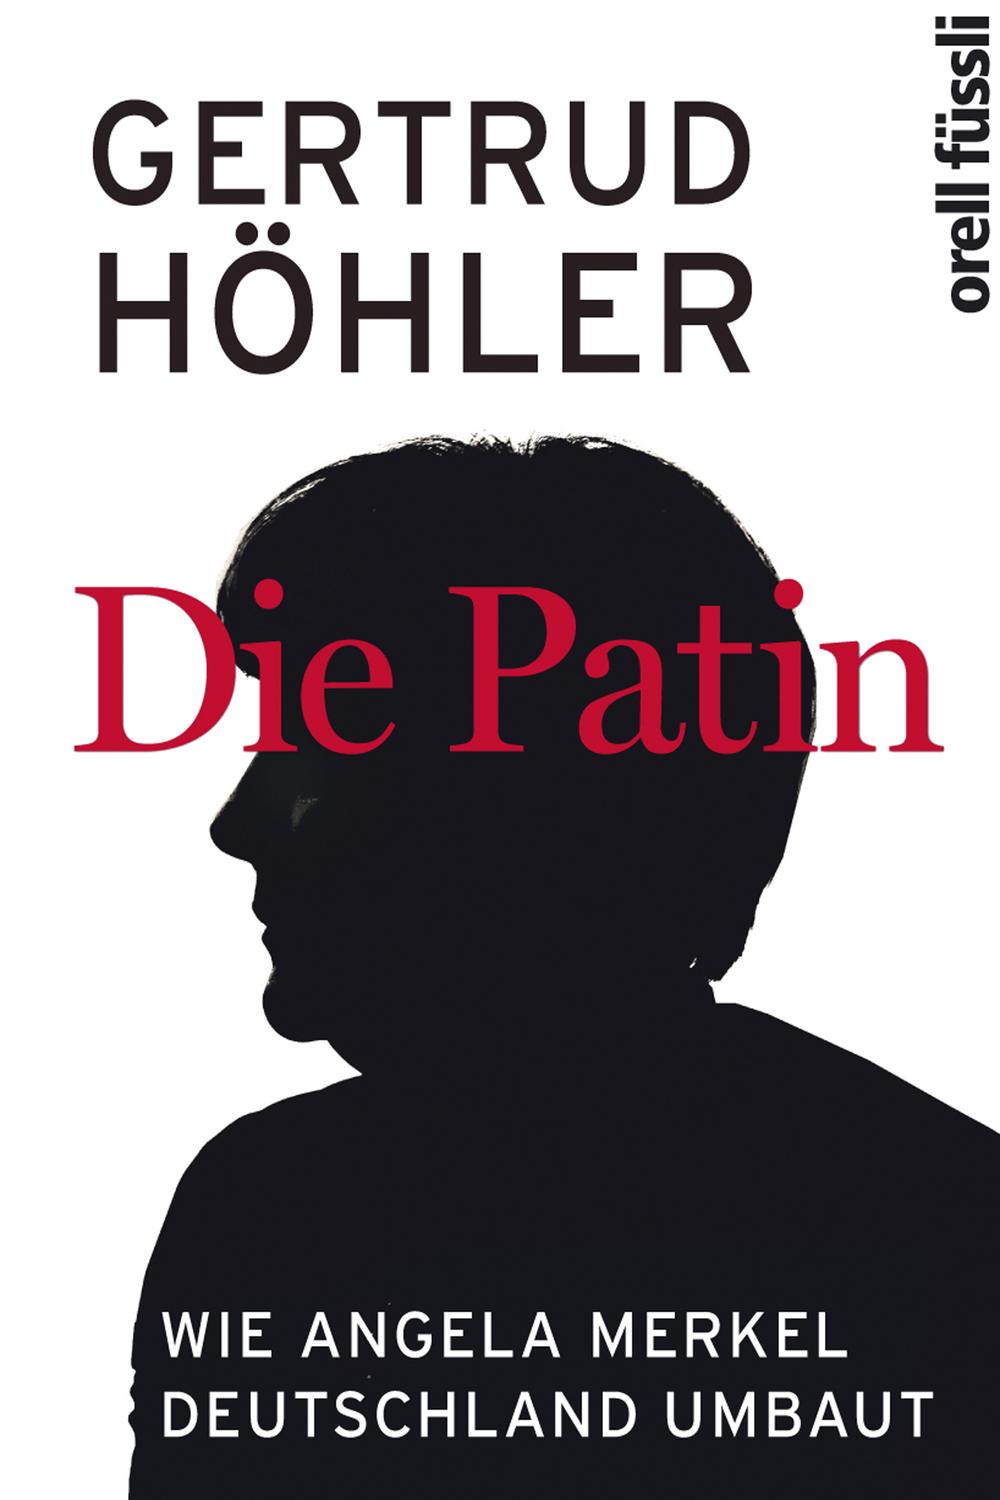 Die Patin - Gertrud Höhler